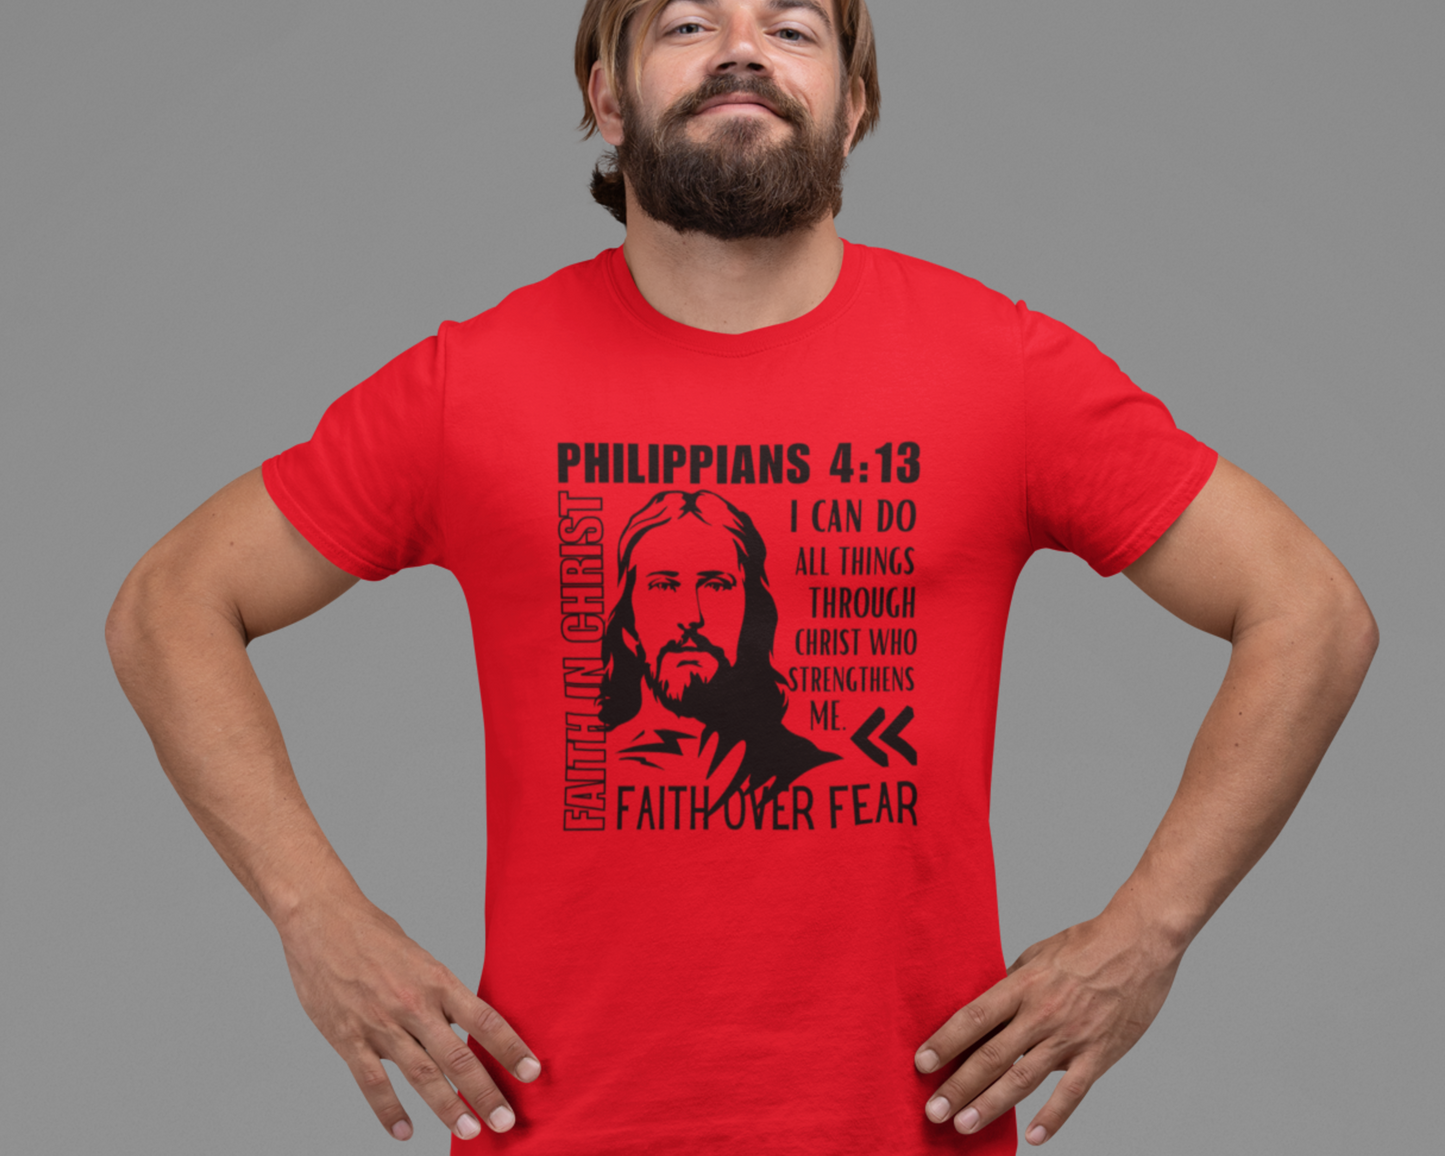 Philippians 4:13 Christian T-Shirt For Men